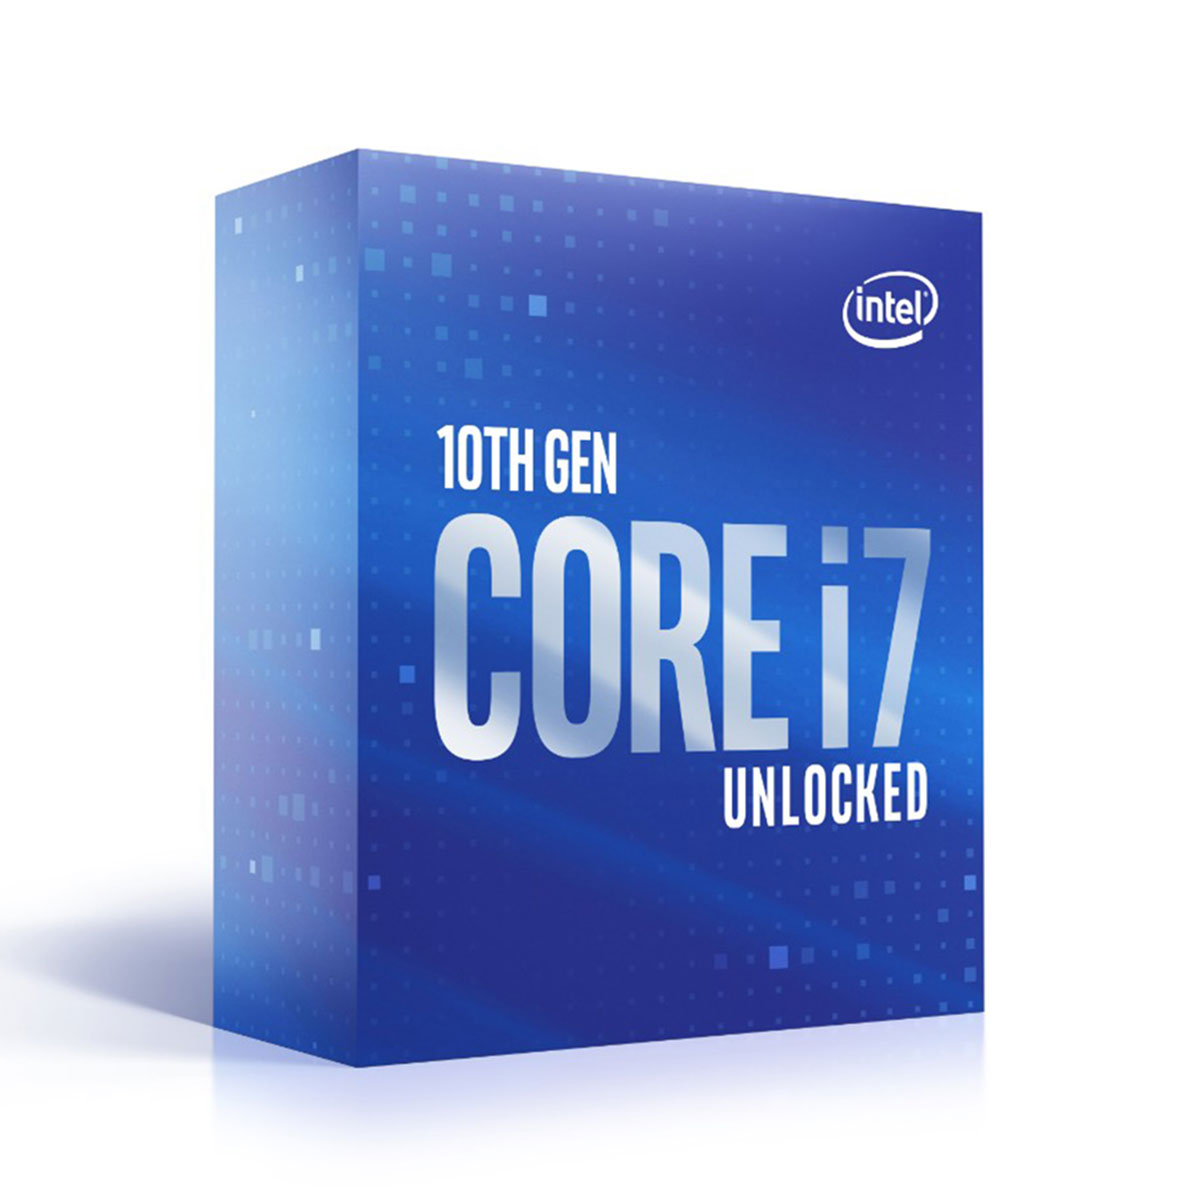 Intel - Intel Core i7-10700K 3.8GHz (Comet Lake) Socket LGA1200 Processor - Retail